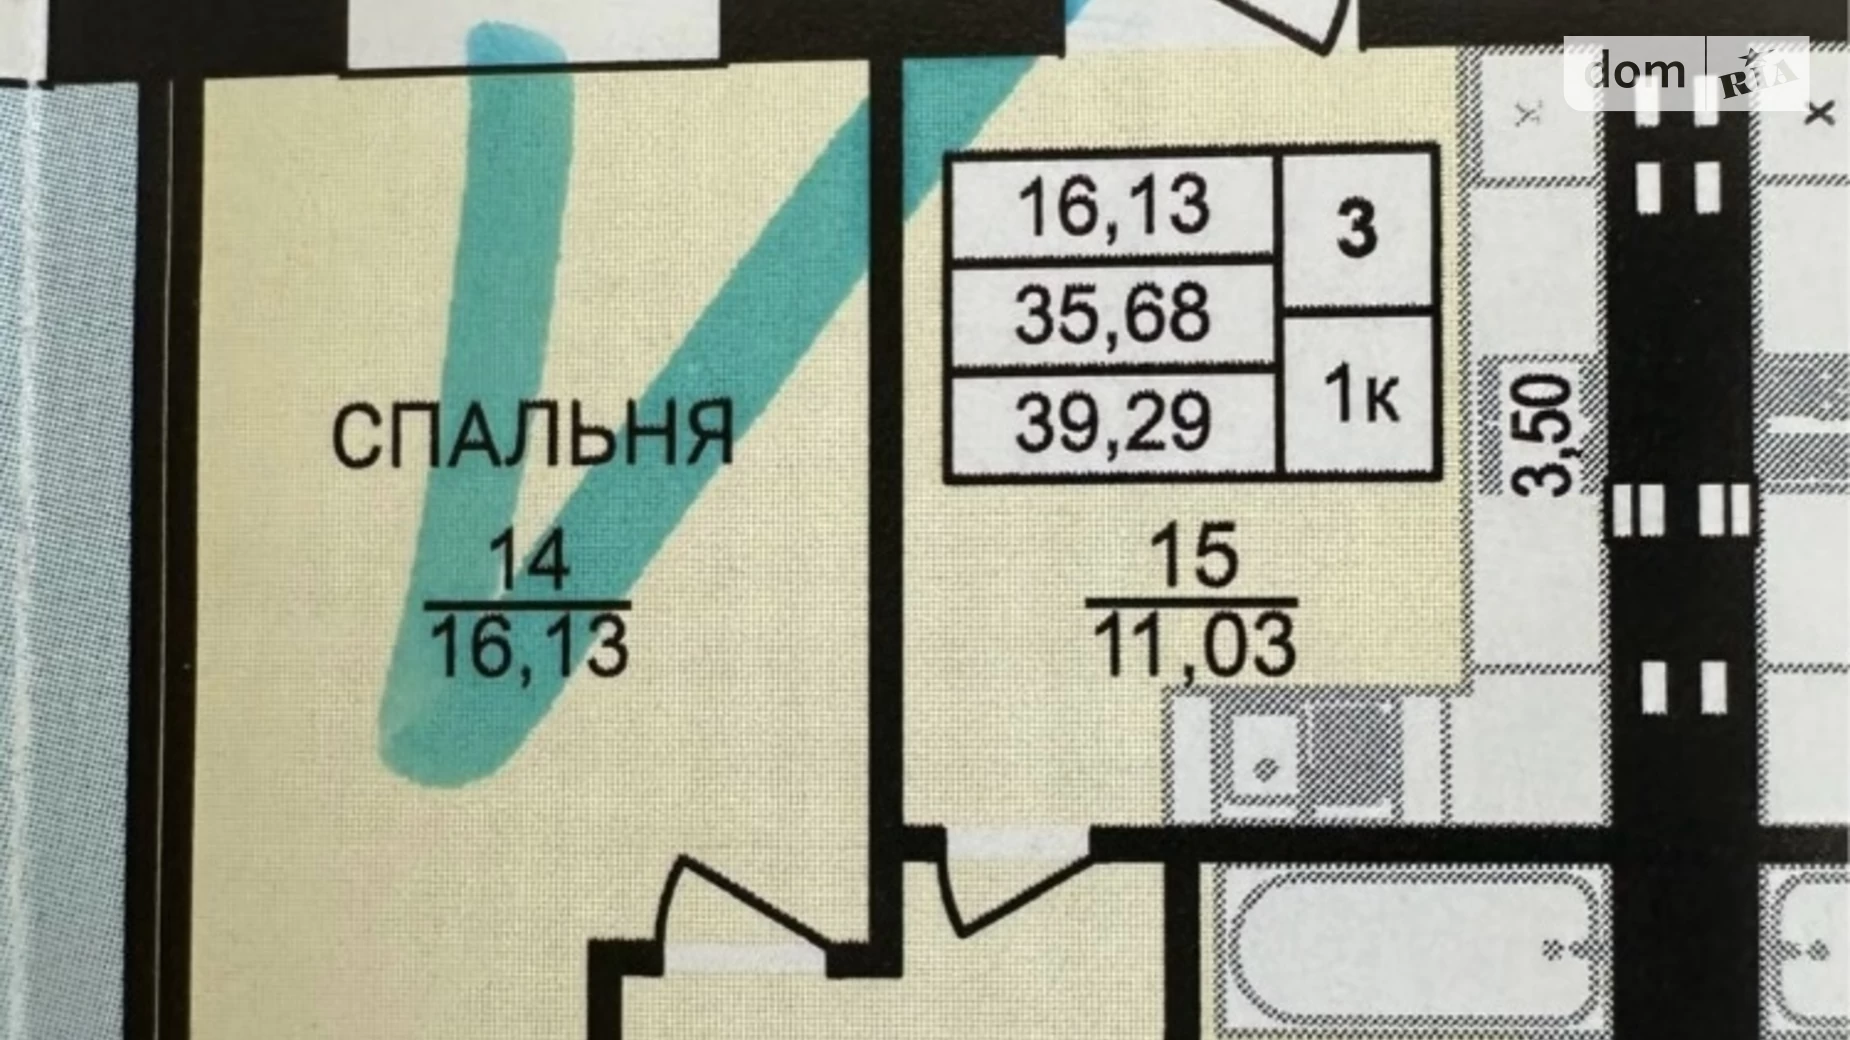 1-кімнатна квартира 39.29 кв. м у Тернополі, вул. Текстильна - фото 3